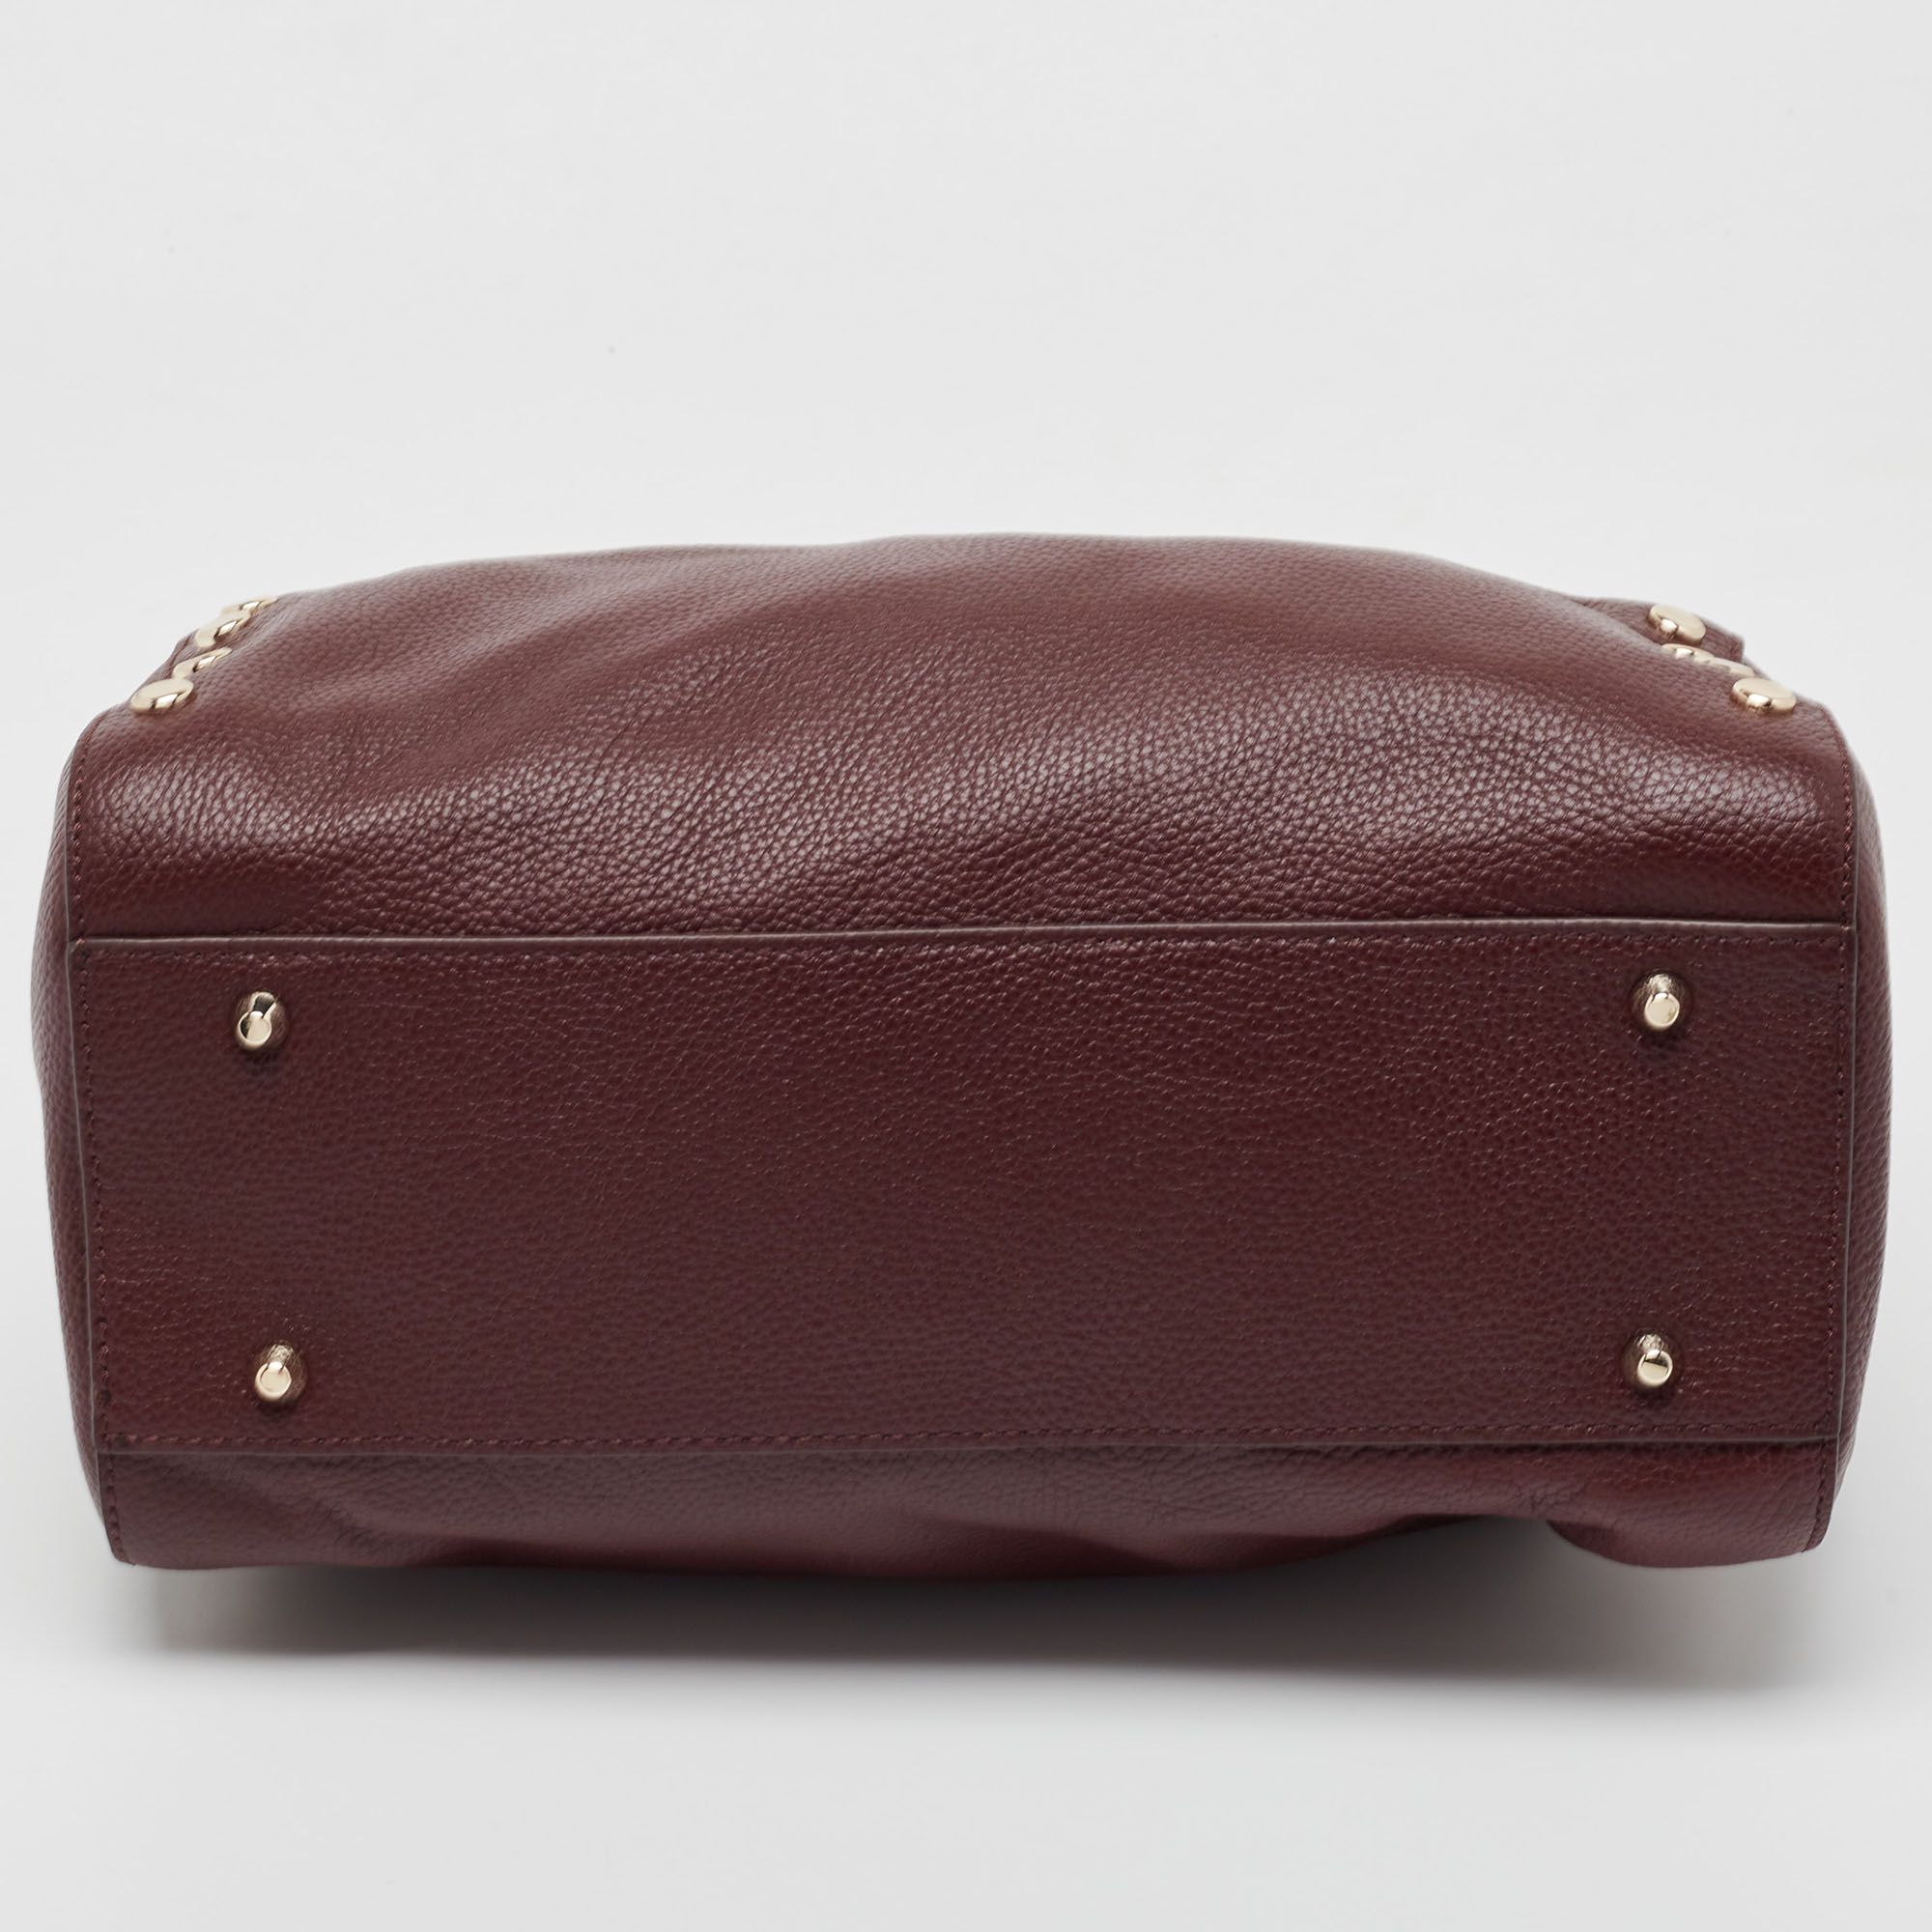 DKNY Burgundy Leather Studded Boston Bag